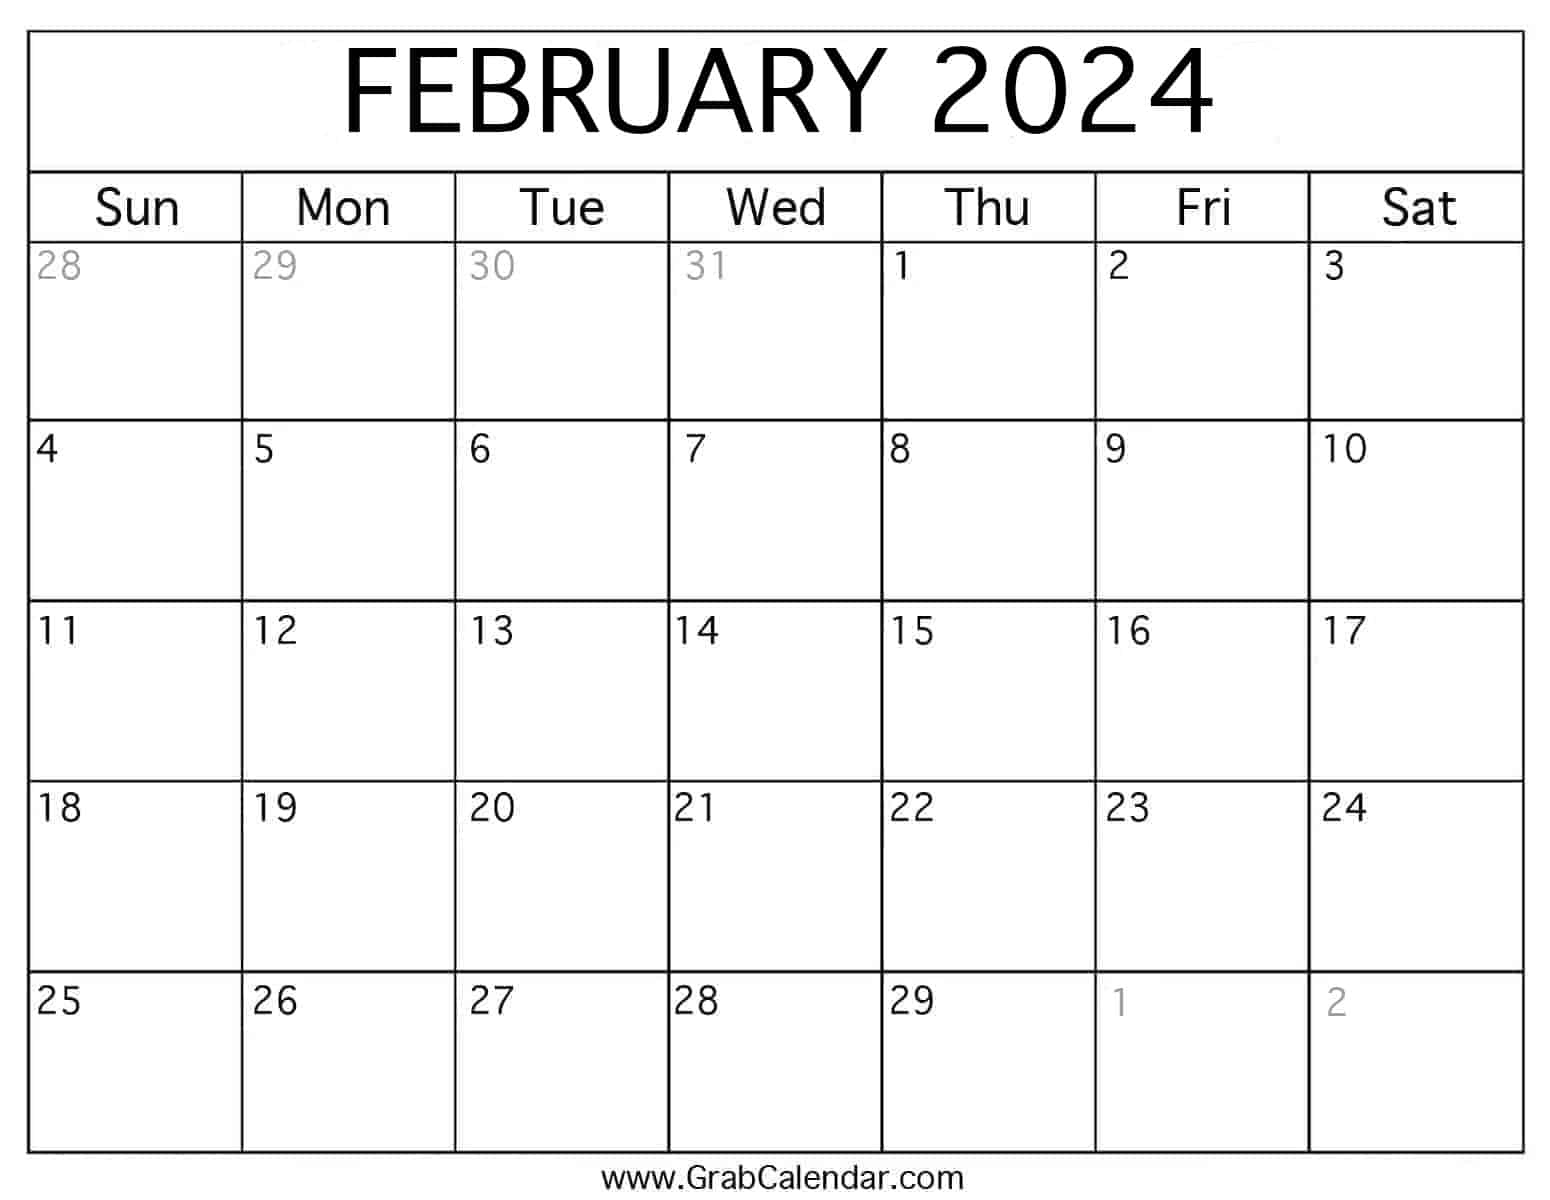 Printable February 2024 Calendar intended for Free Printable Blank February 2024 Calendar